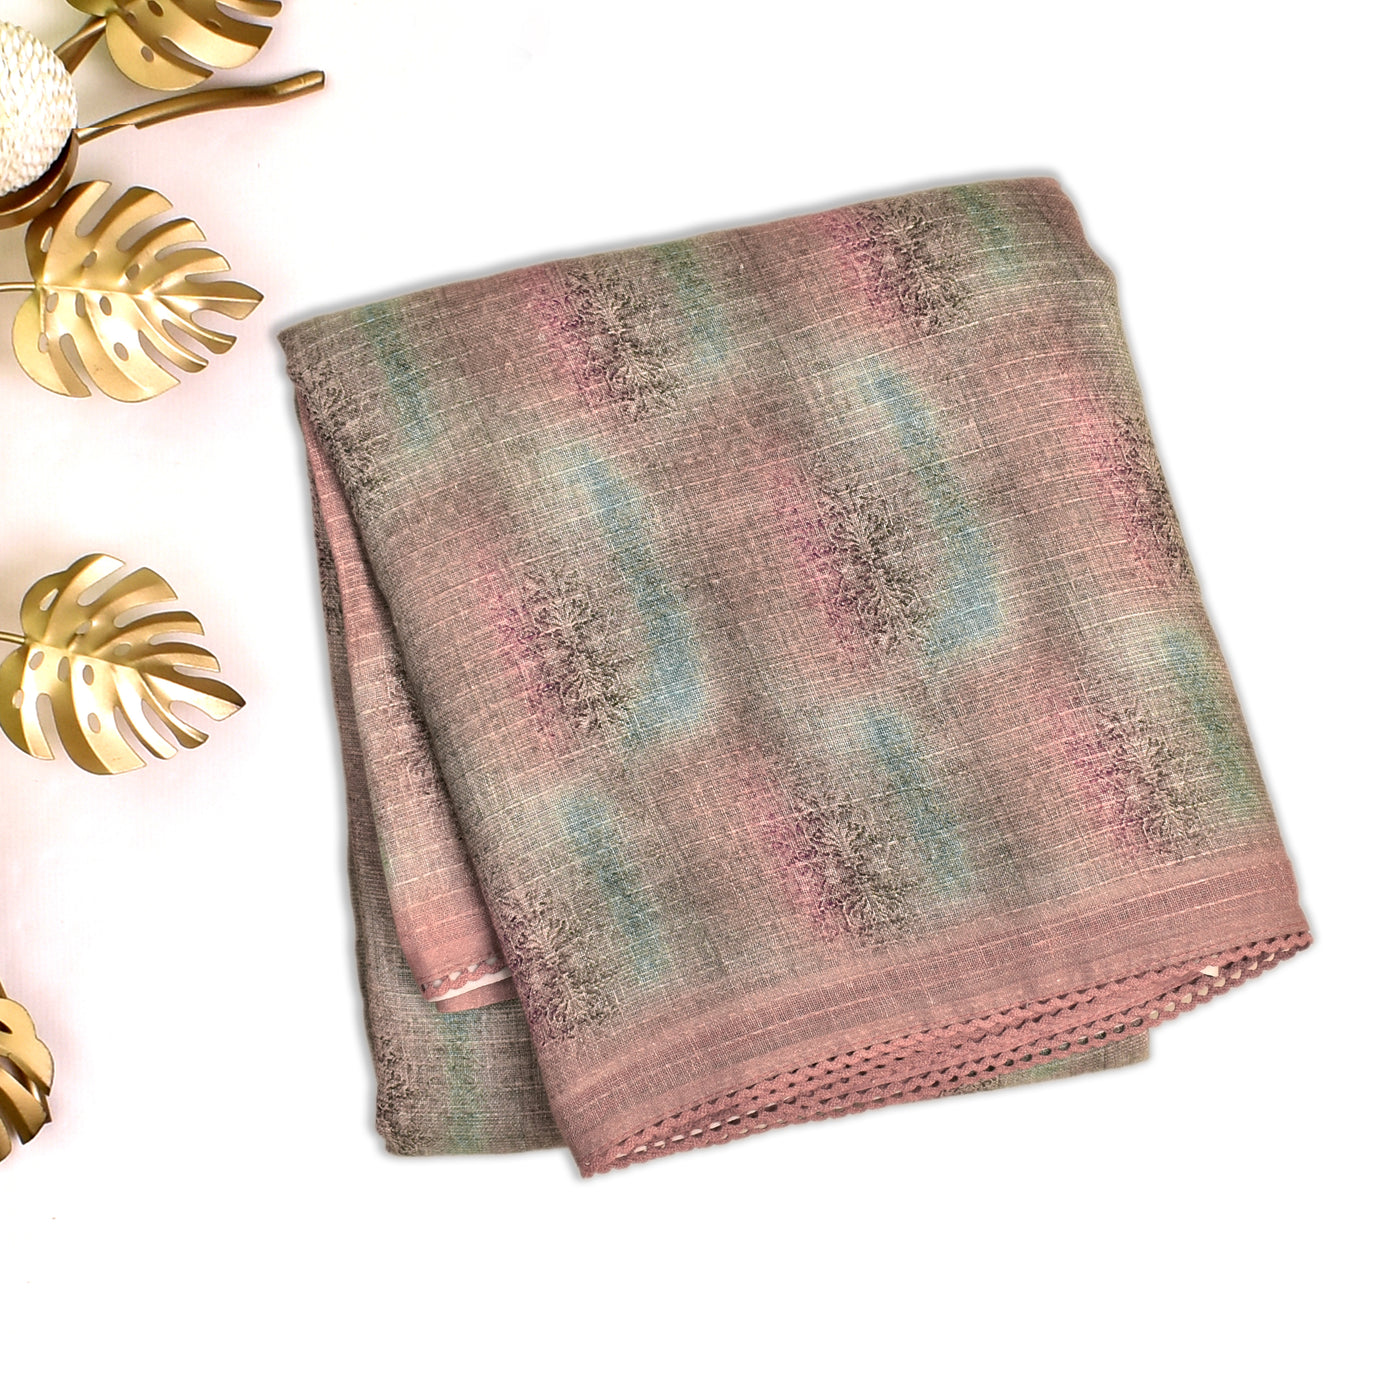 Multicolor Linen Saree with Printed Design